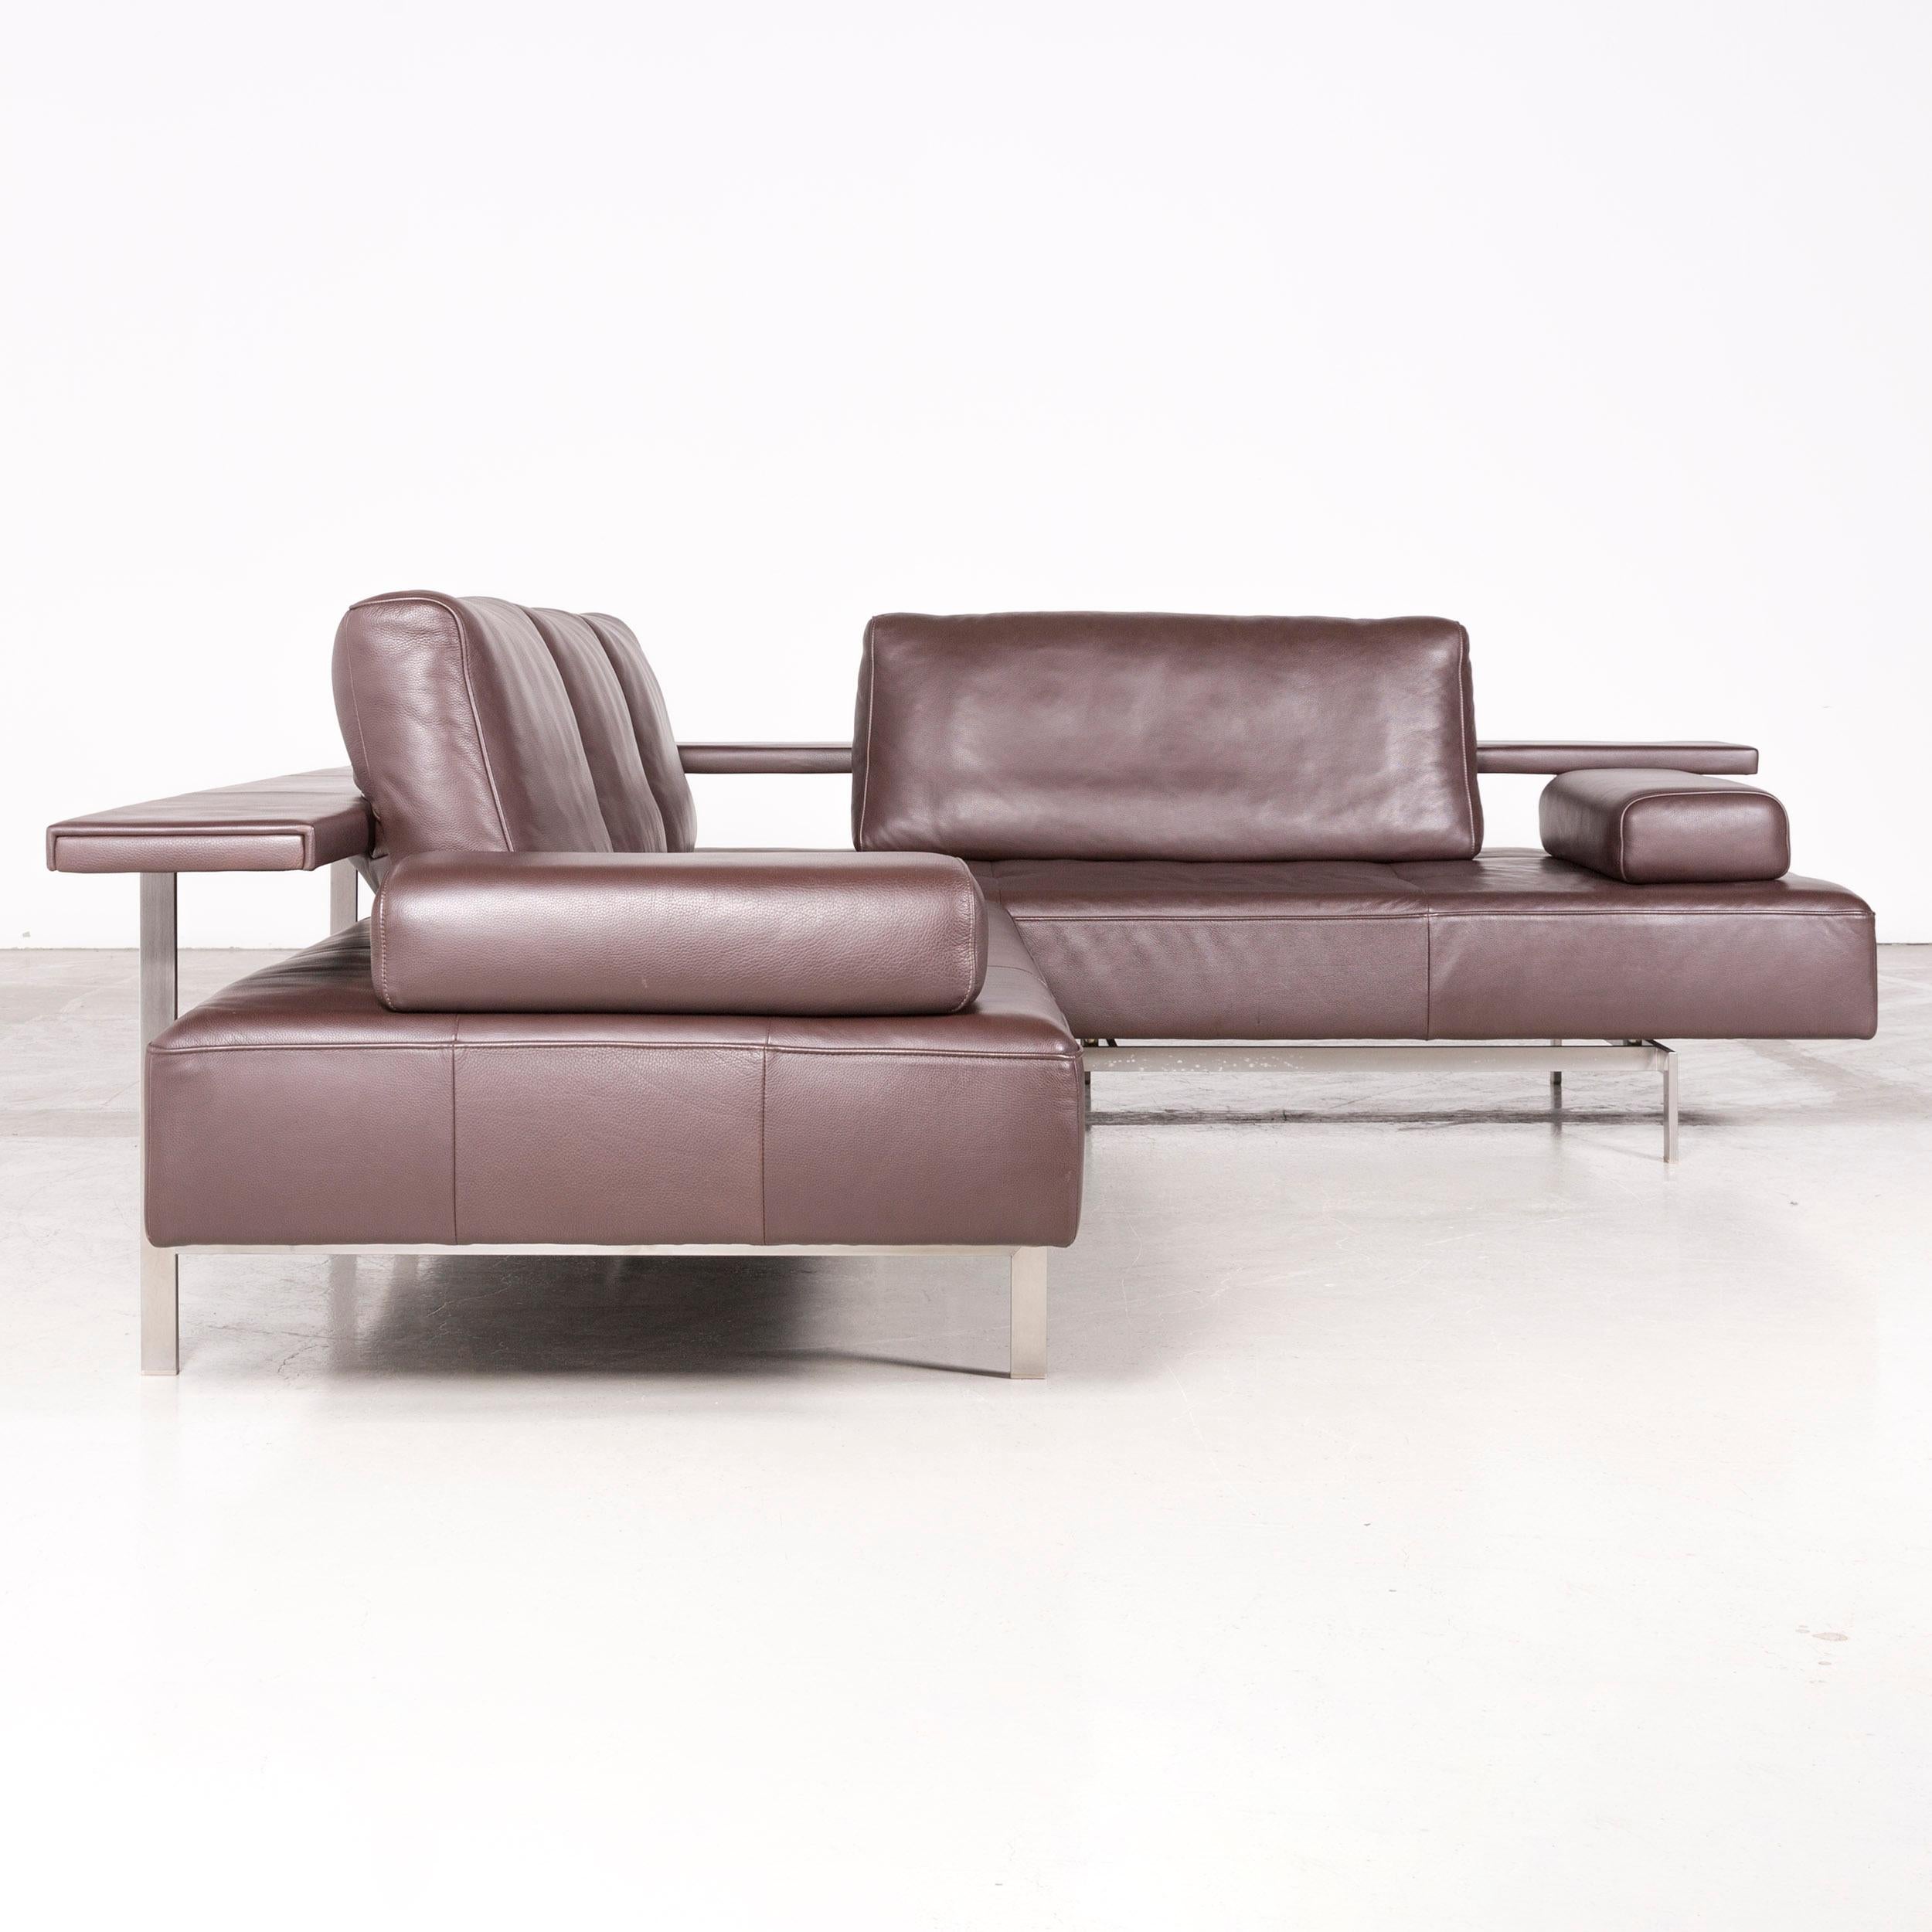 Rolf Benz Dono Designer Leather Corner Sofa Brown Genuine Leather Sofa Couch 2